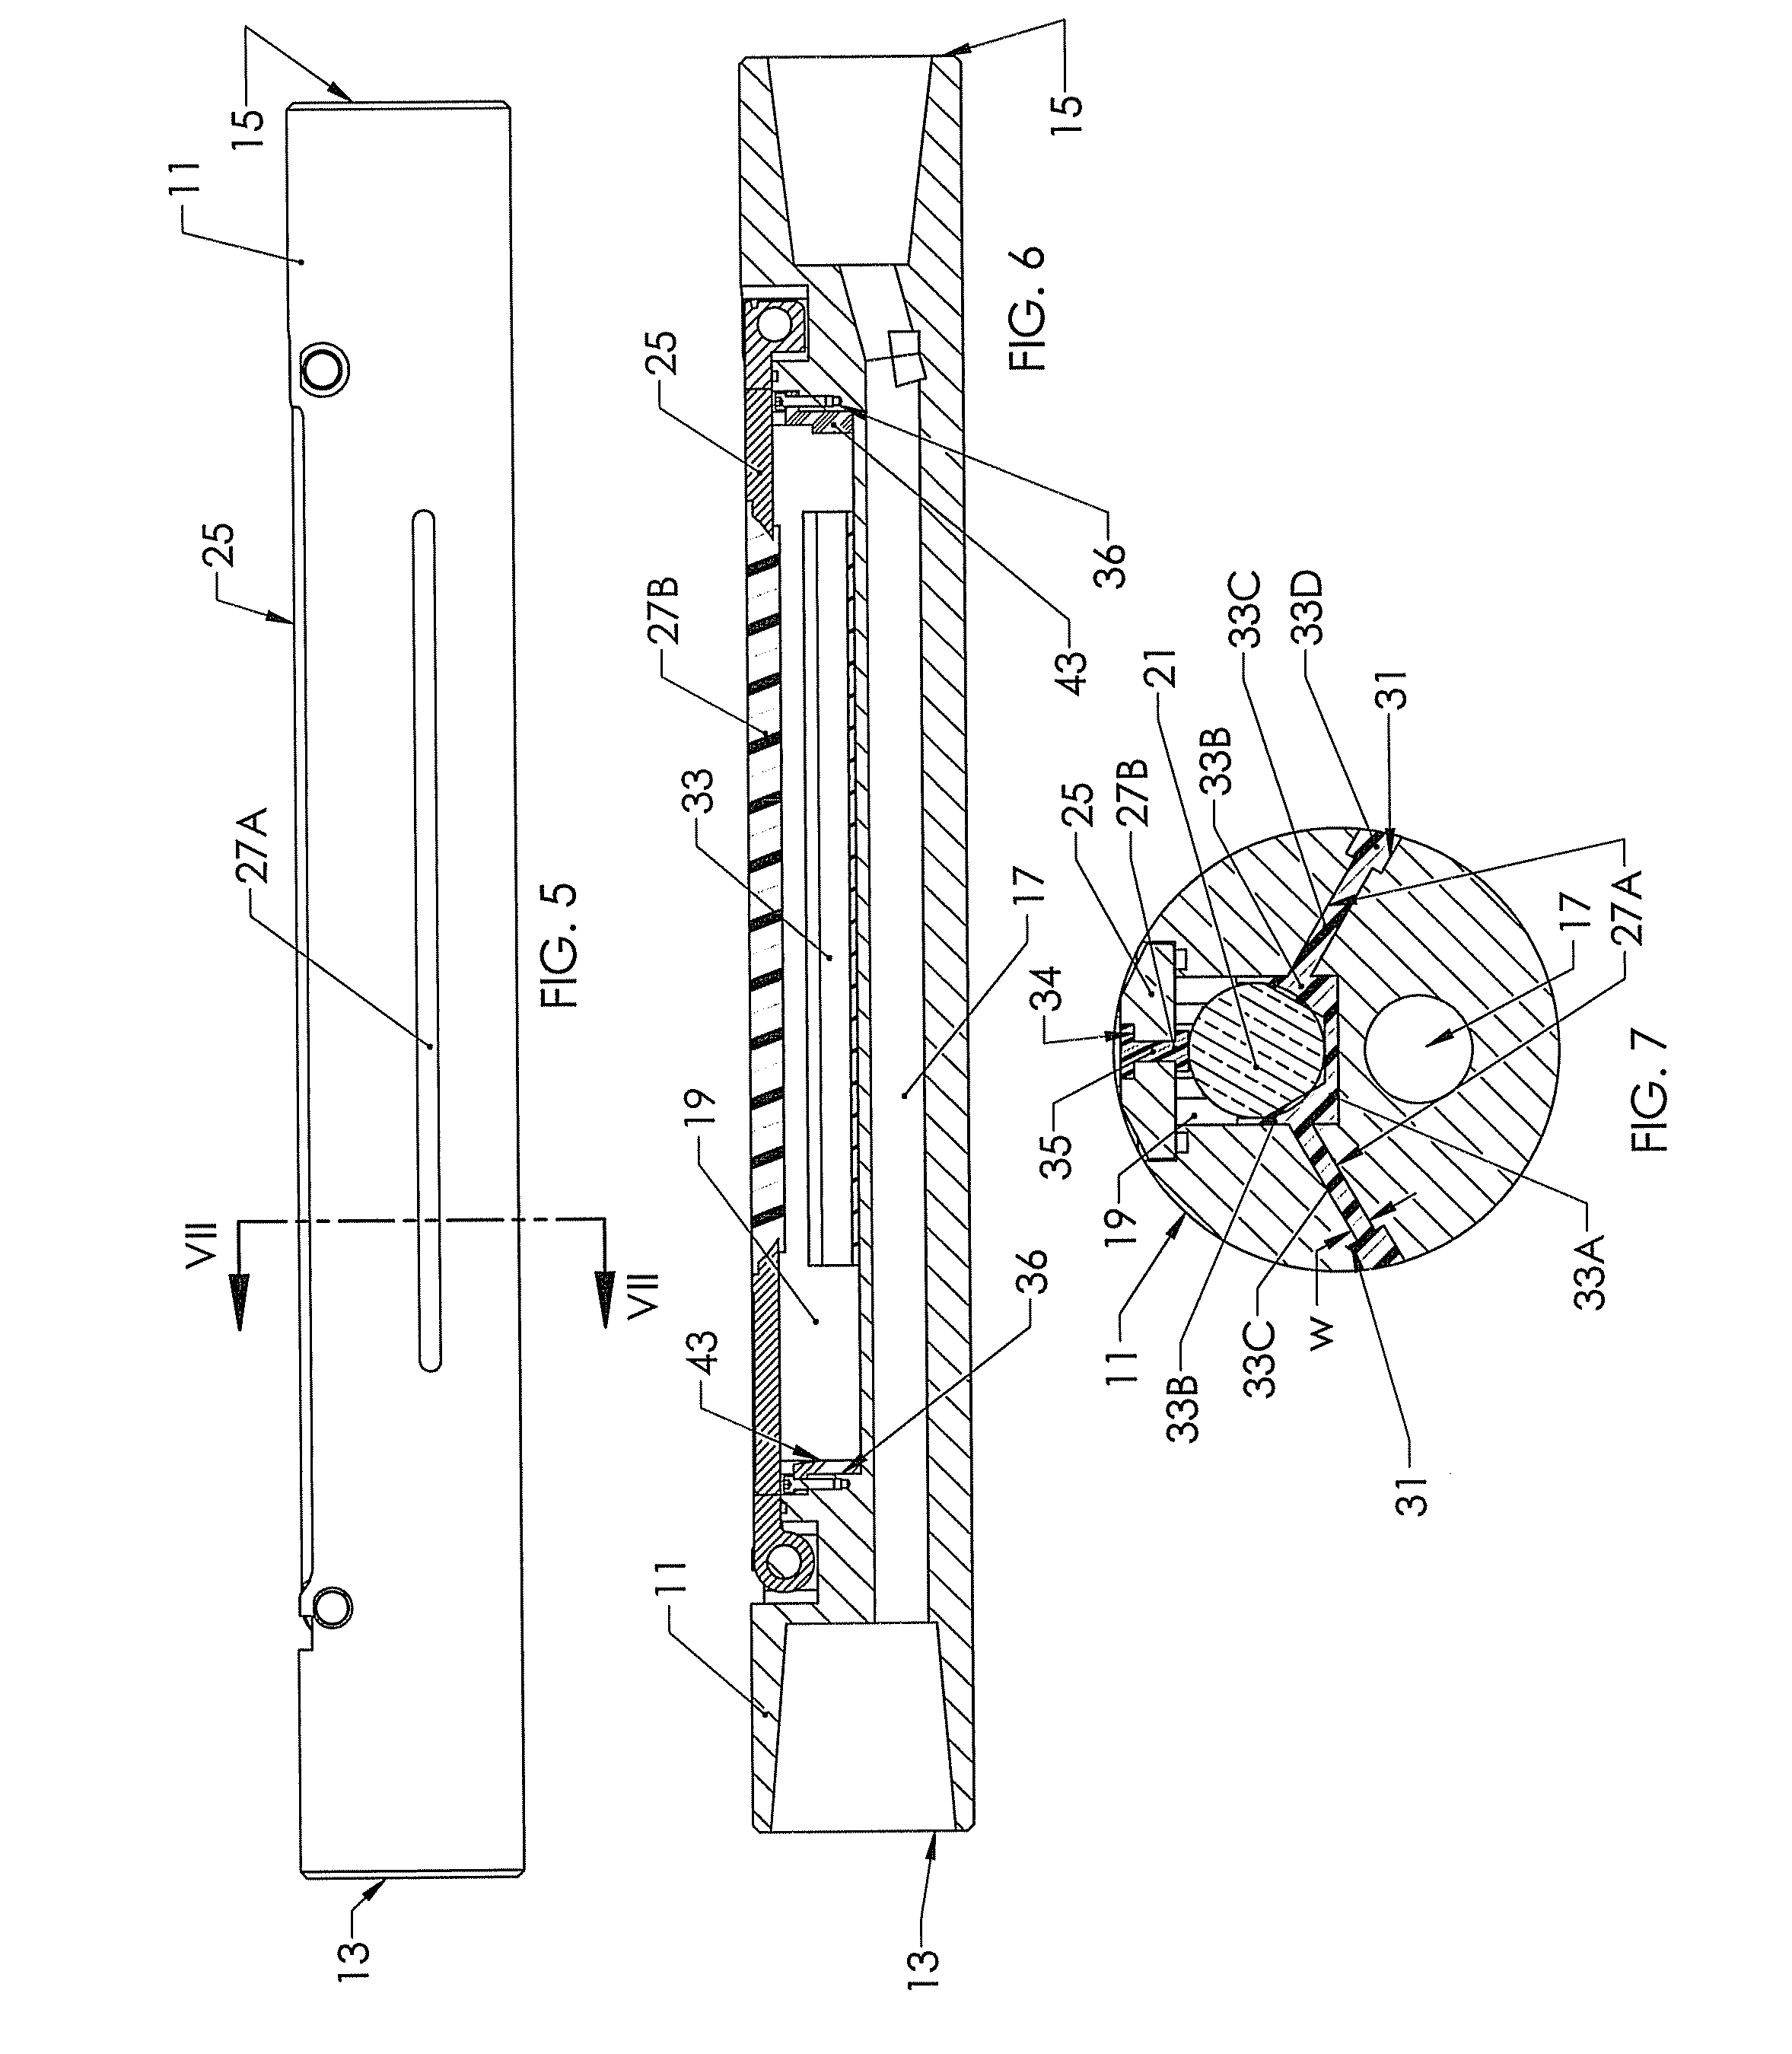 Sonde housing and bit body arrangement for horizontal directional drilling